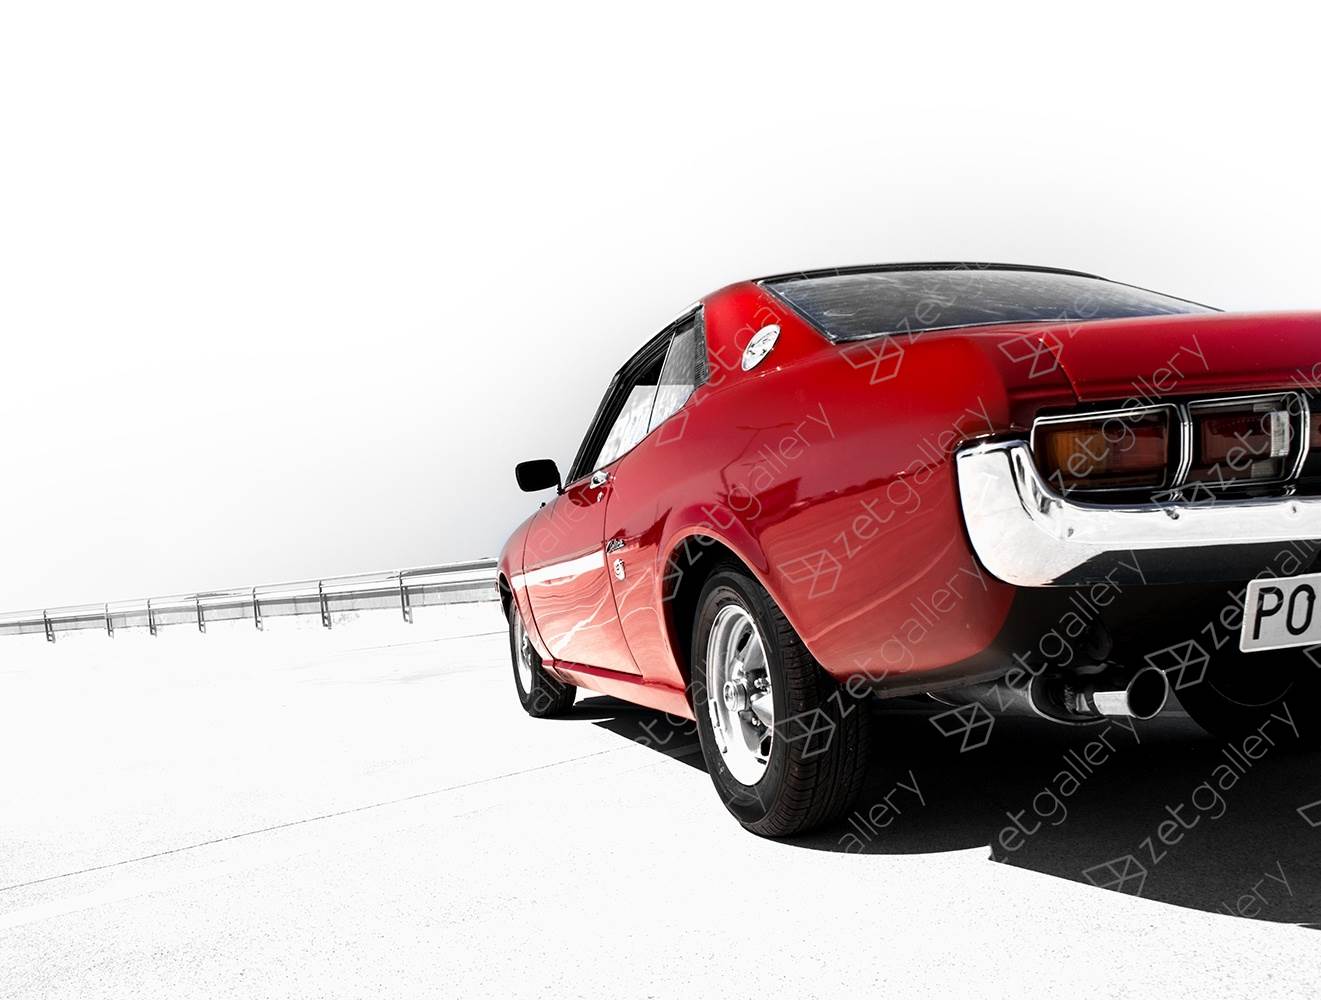 Toyota Celica GT 01, original Avant-Garde Digital Photography by Yggdrasil Art